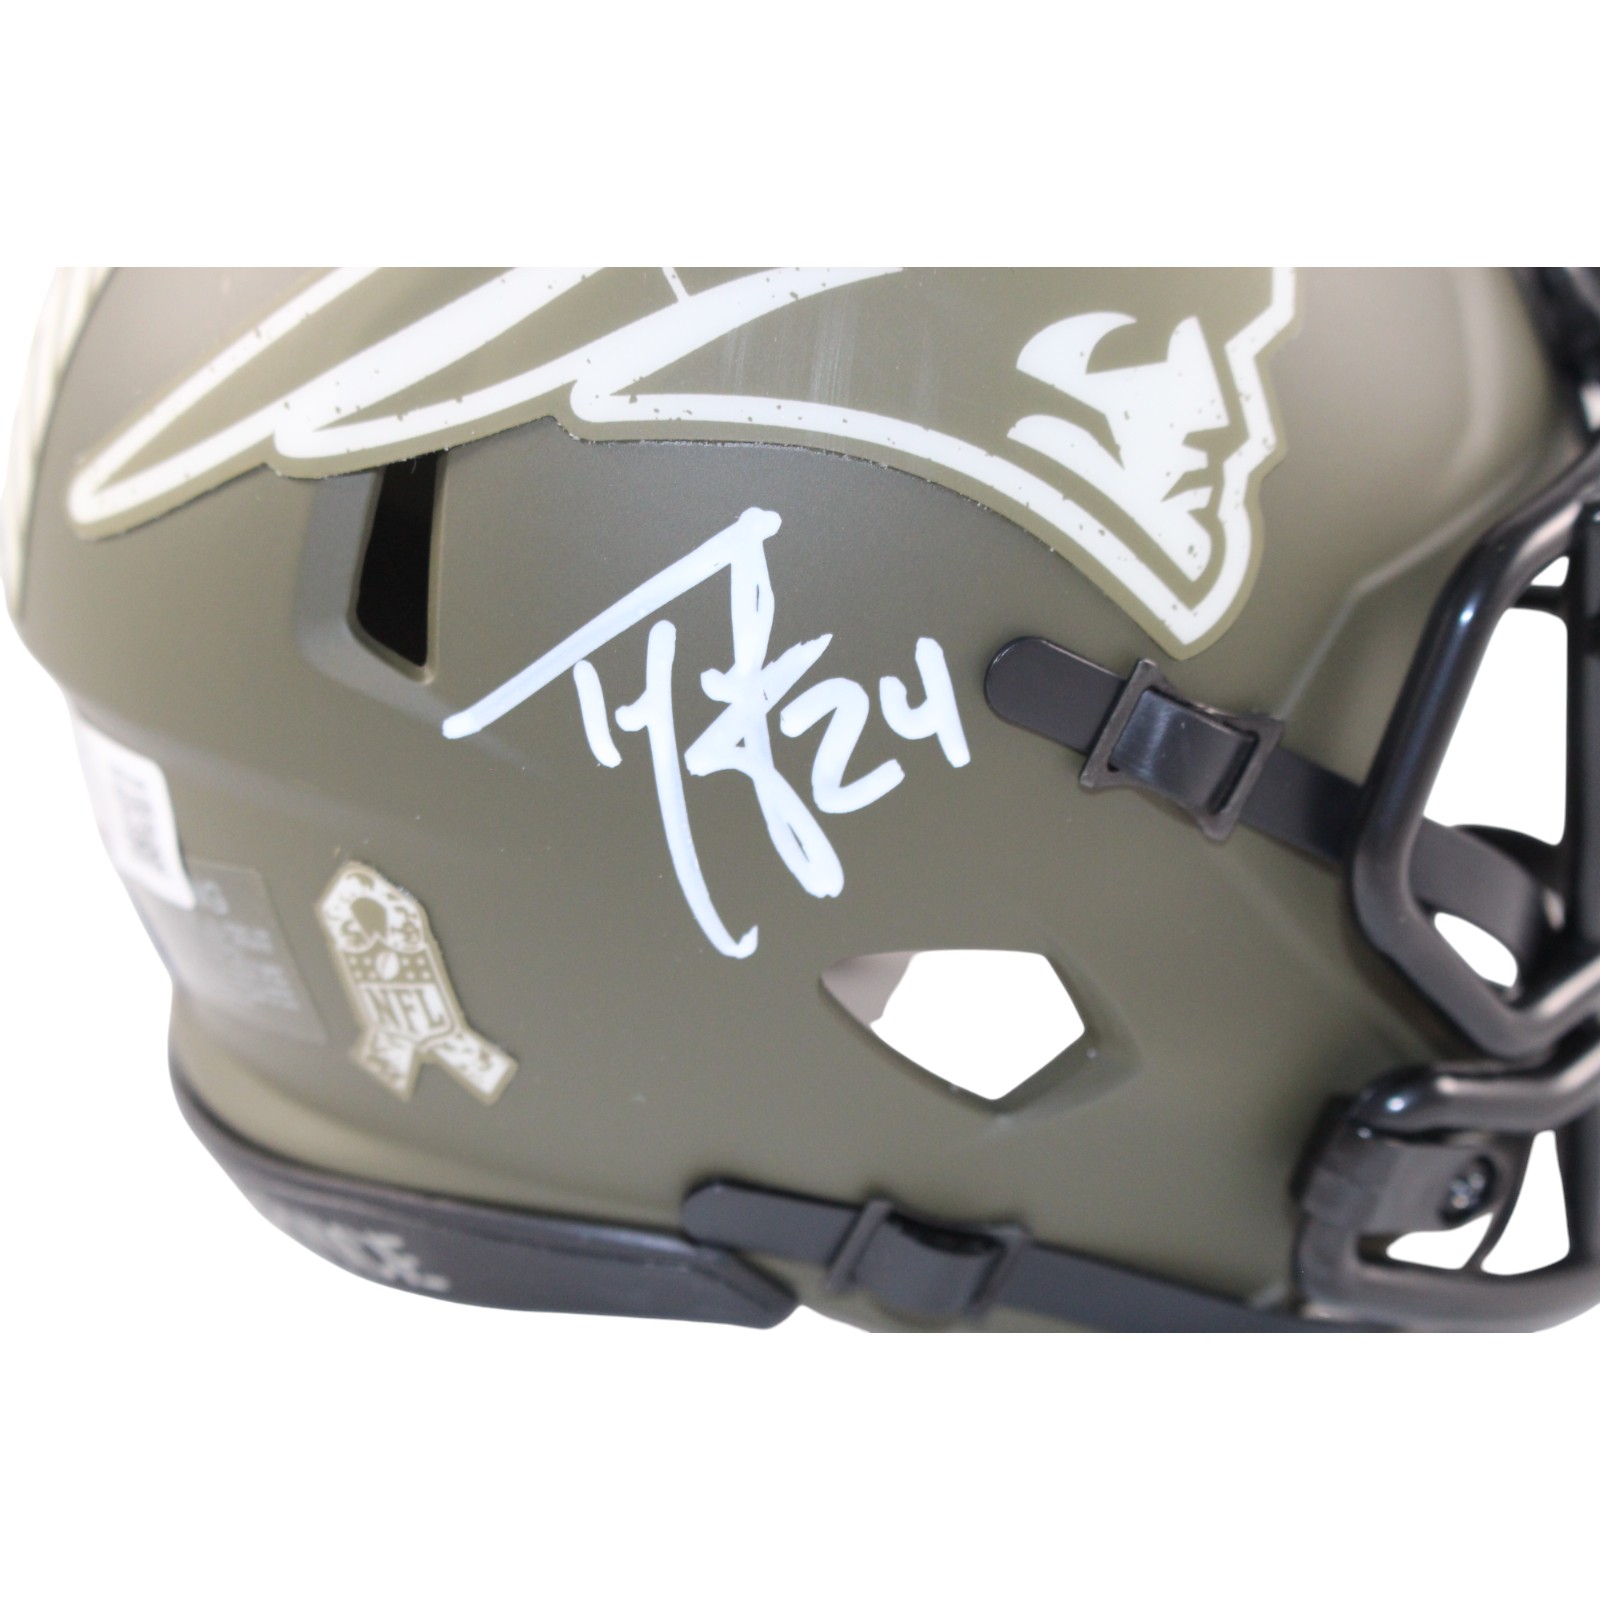 Ty Law Autographed New England Patriots 22 Salute Mini Helmet Beckett